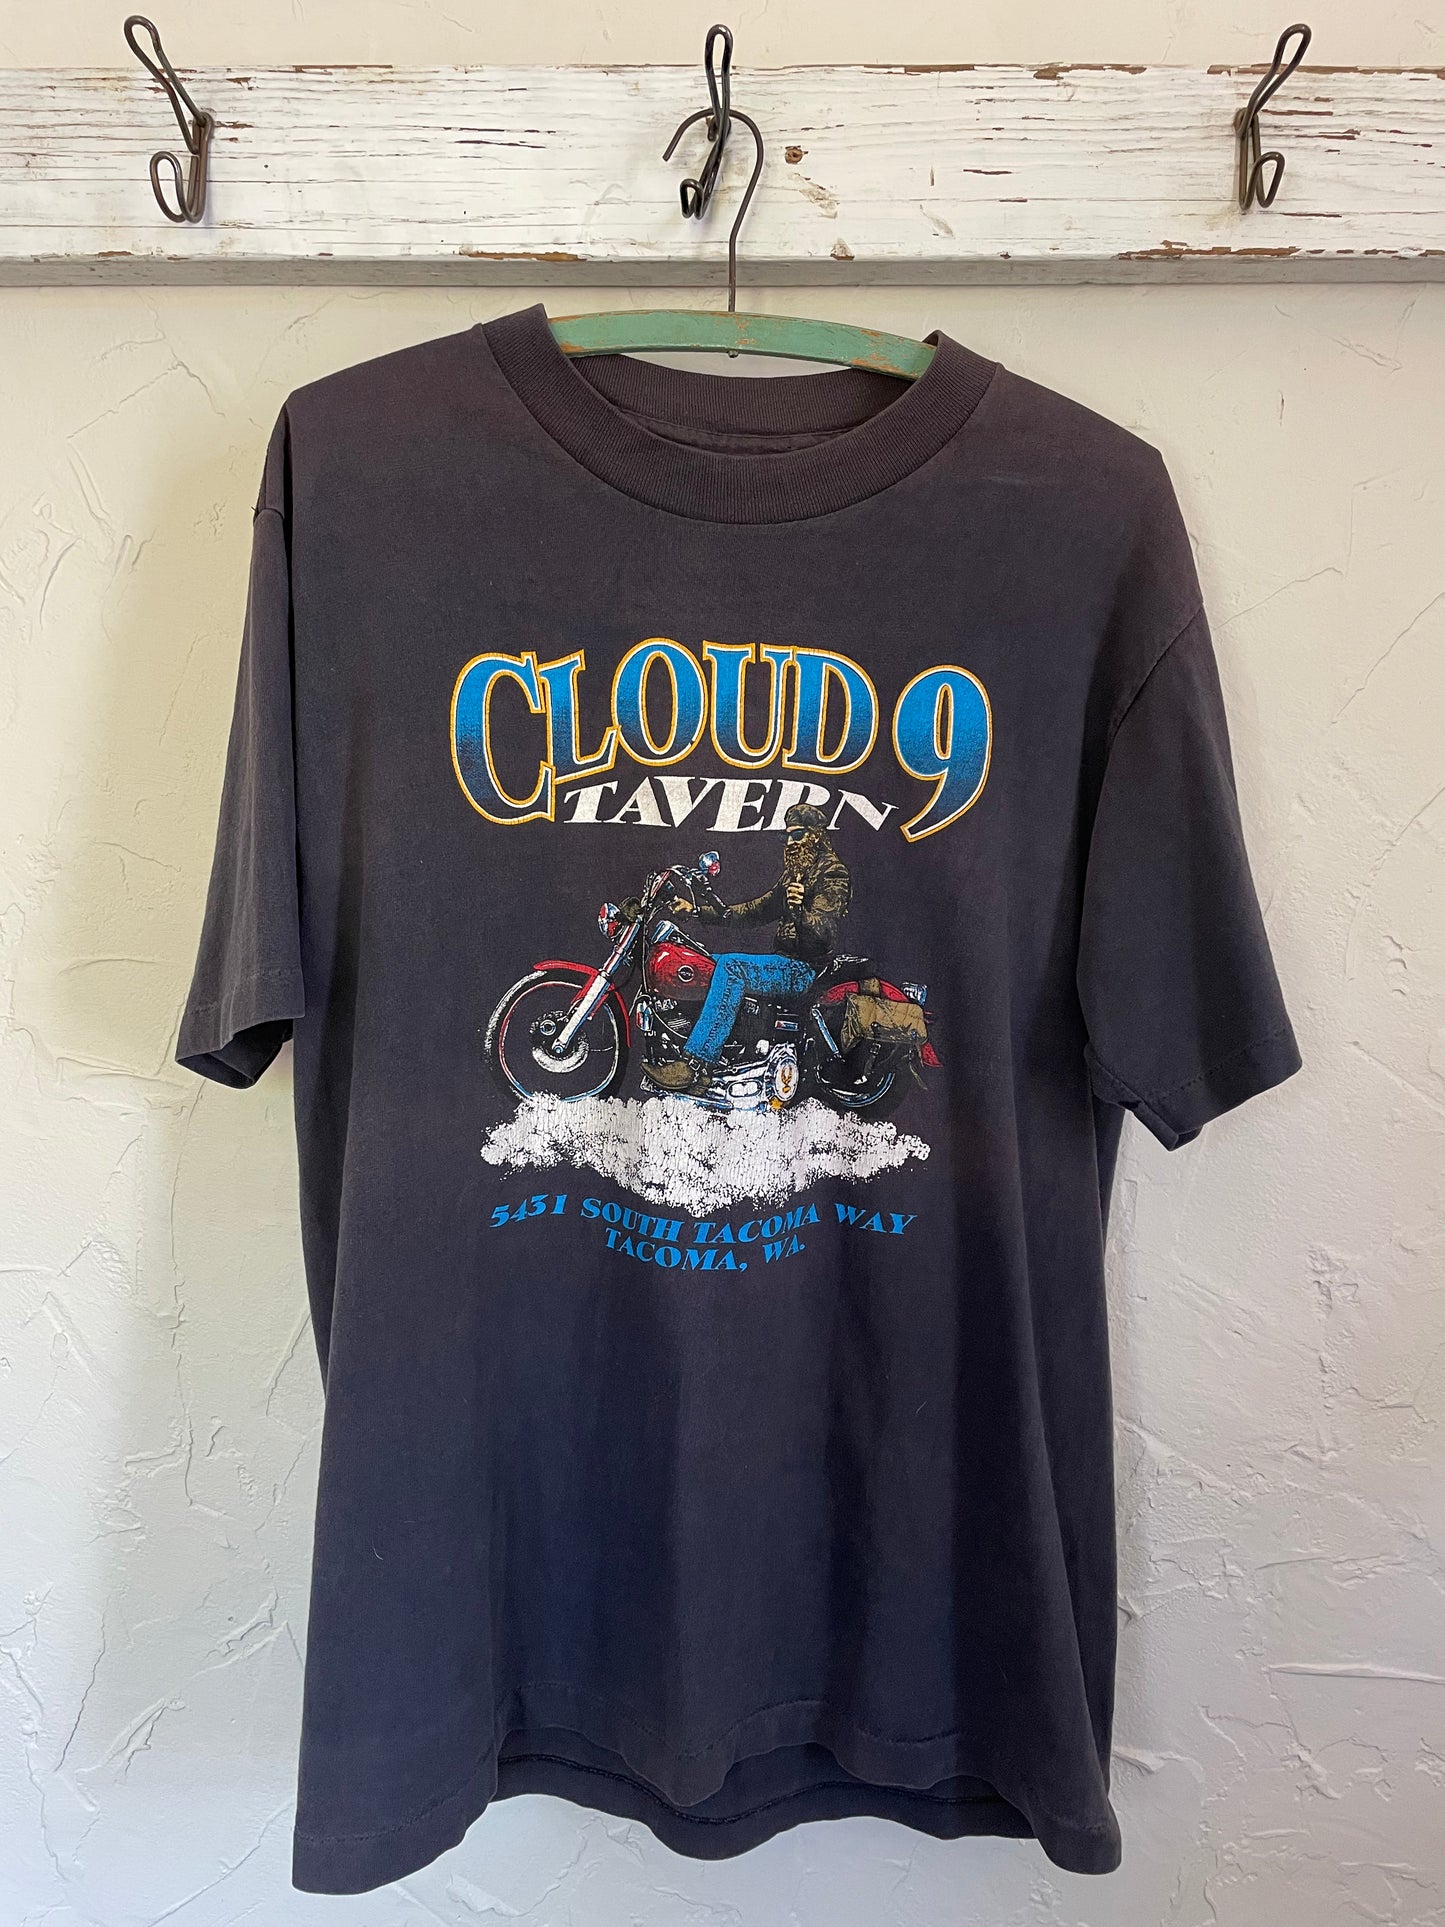 80s Cloud 9 Tavern, Tacoma, WA Tee